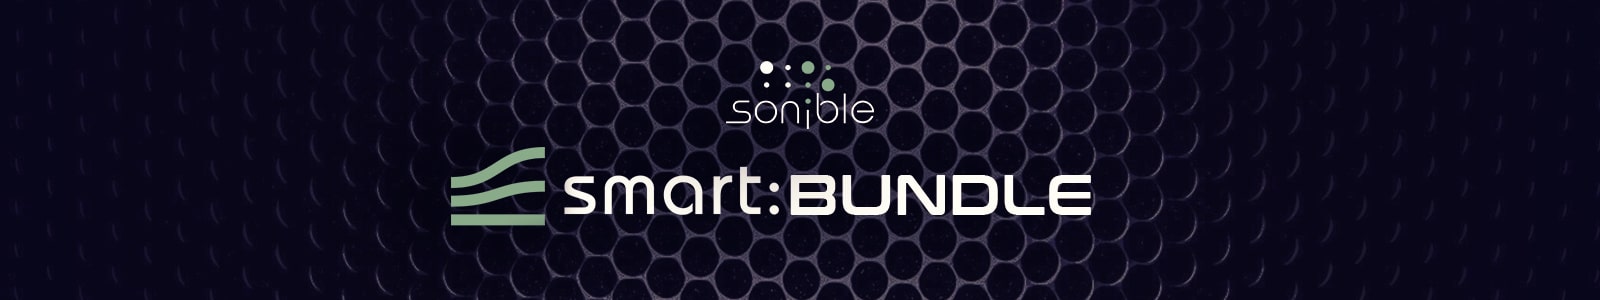 smart:Bundle by sonible